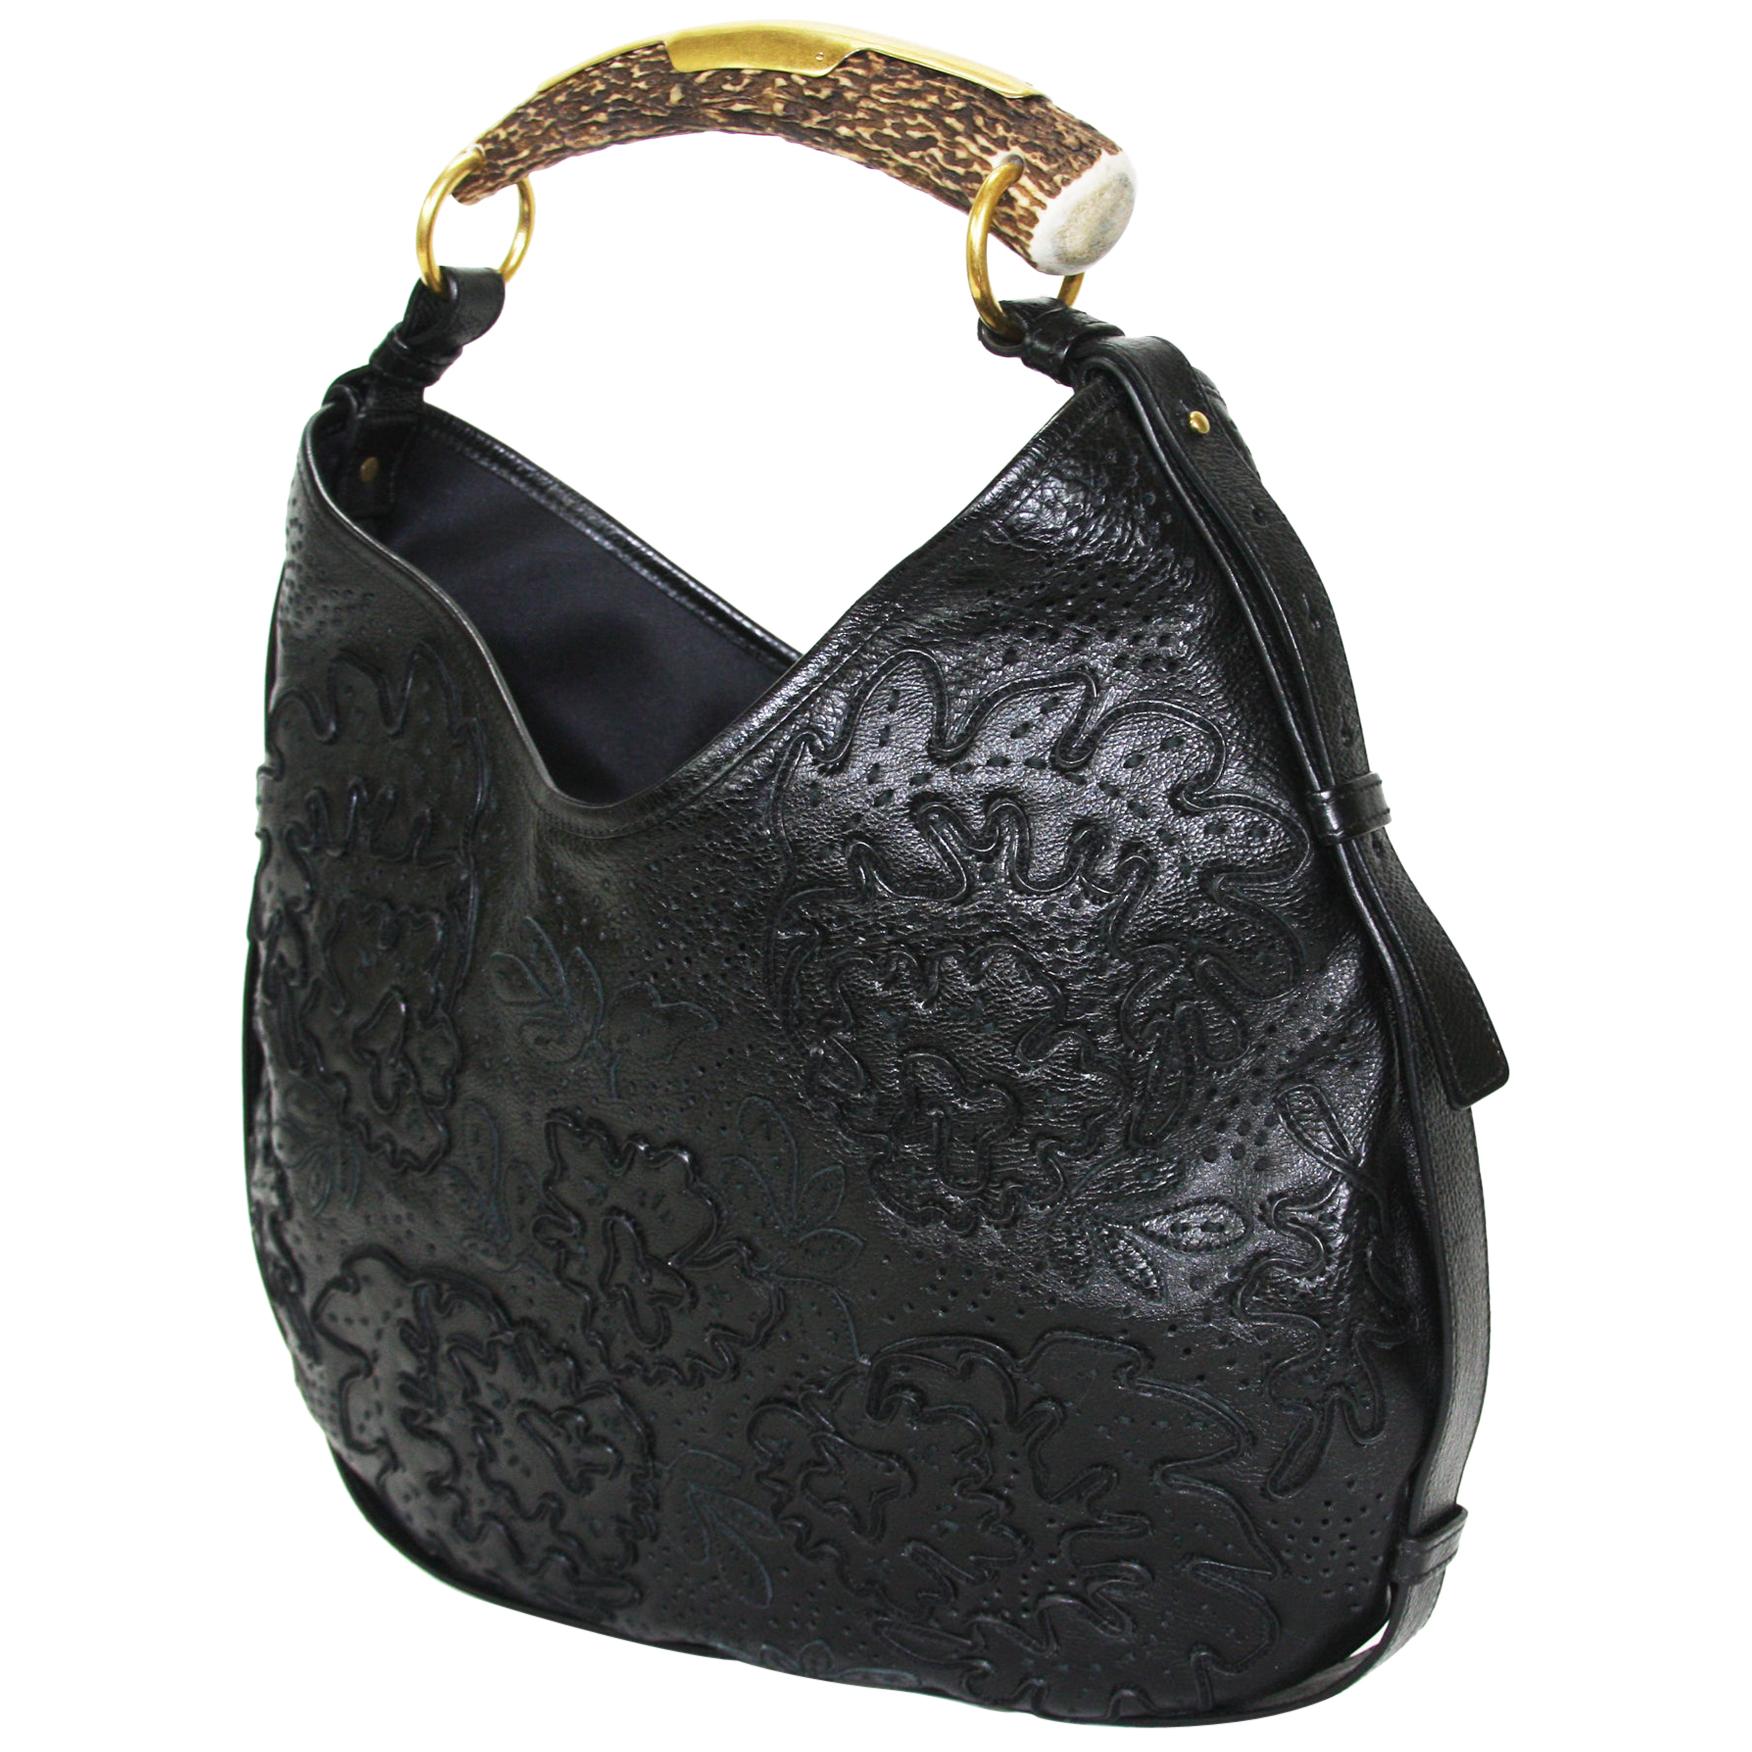 Iconic Tom Ford for Yves Saint Laurent Mombasa Black Embellished Leather Bag